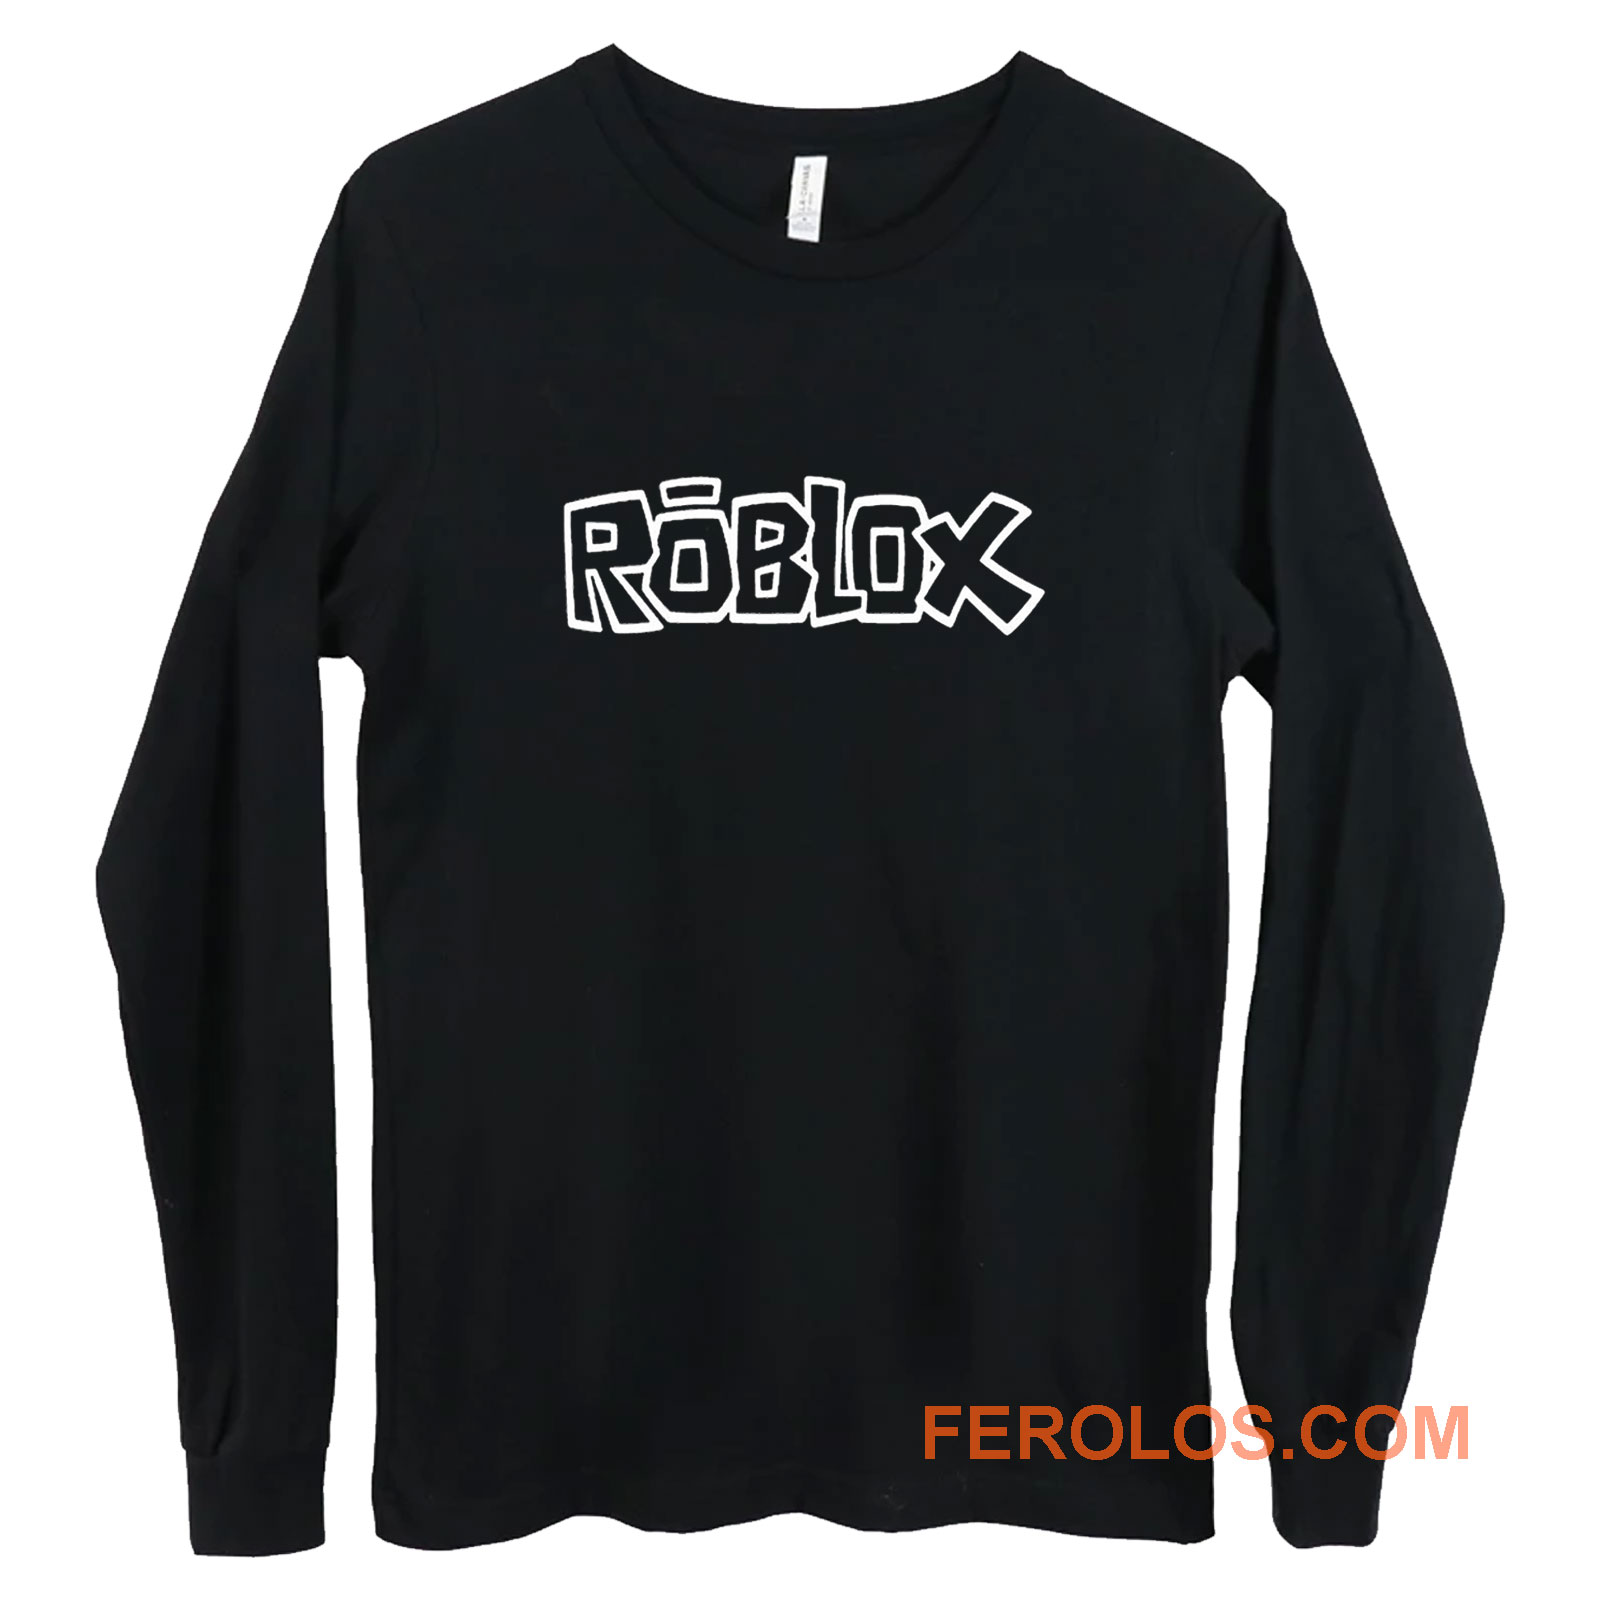 Roblox Long Sleeve Ferolos Com - how long roblox